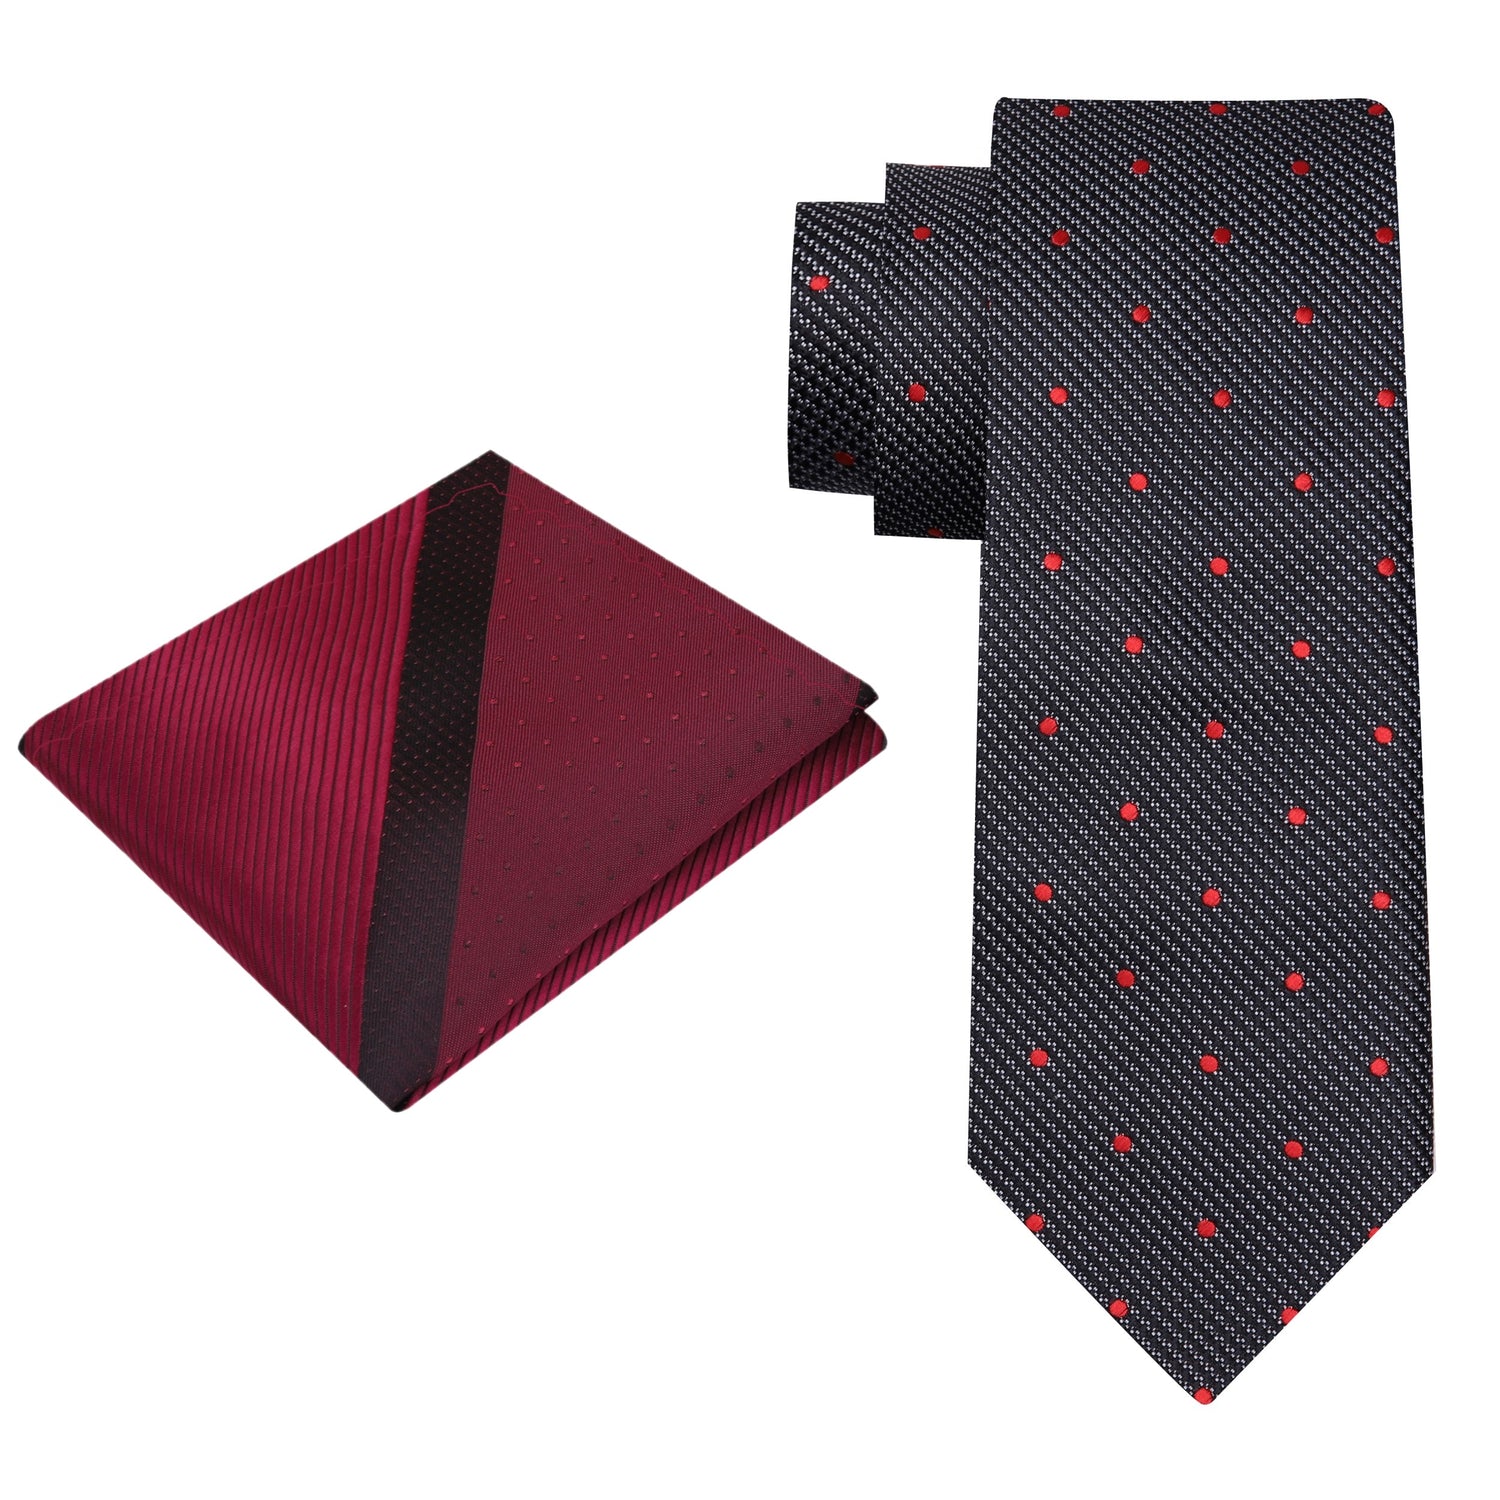 Alt View: A Black, Red Polka Dot With Check Pattern Silk Necktie, Dark Red Pocket Square